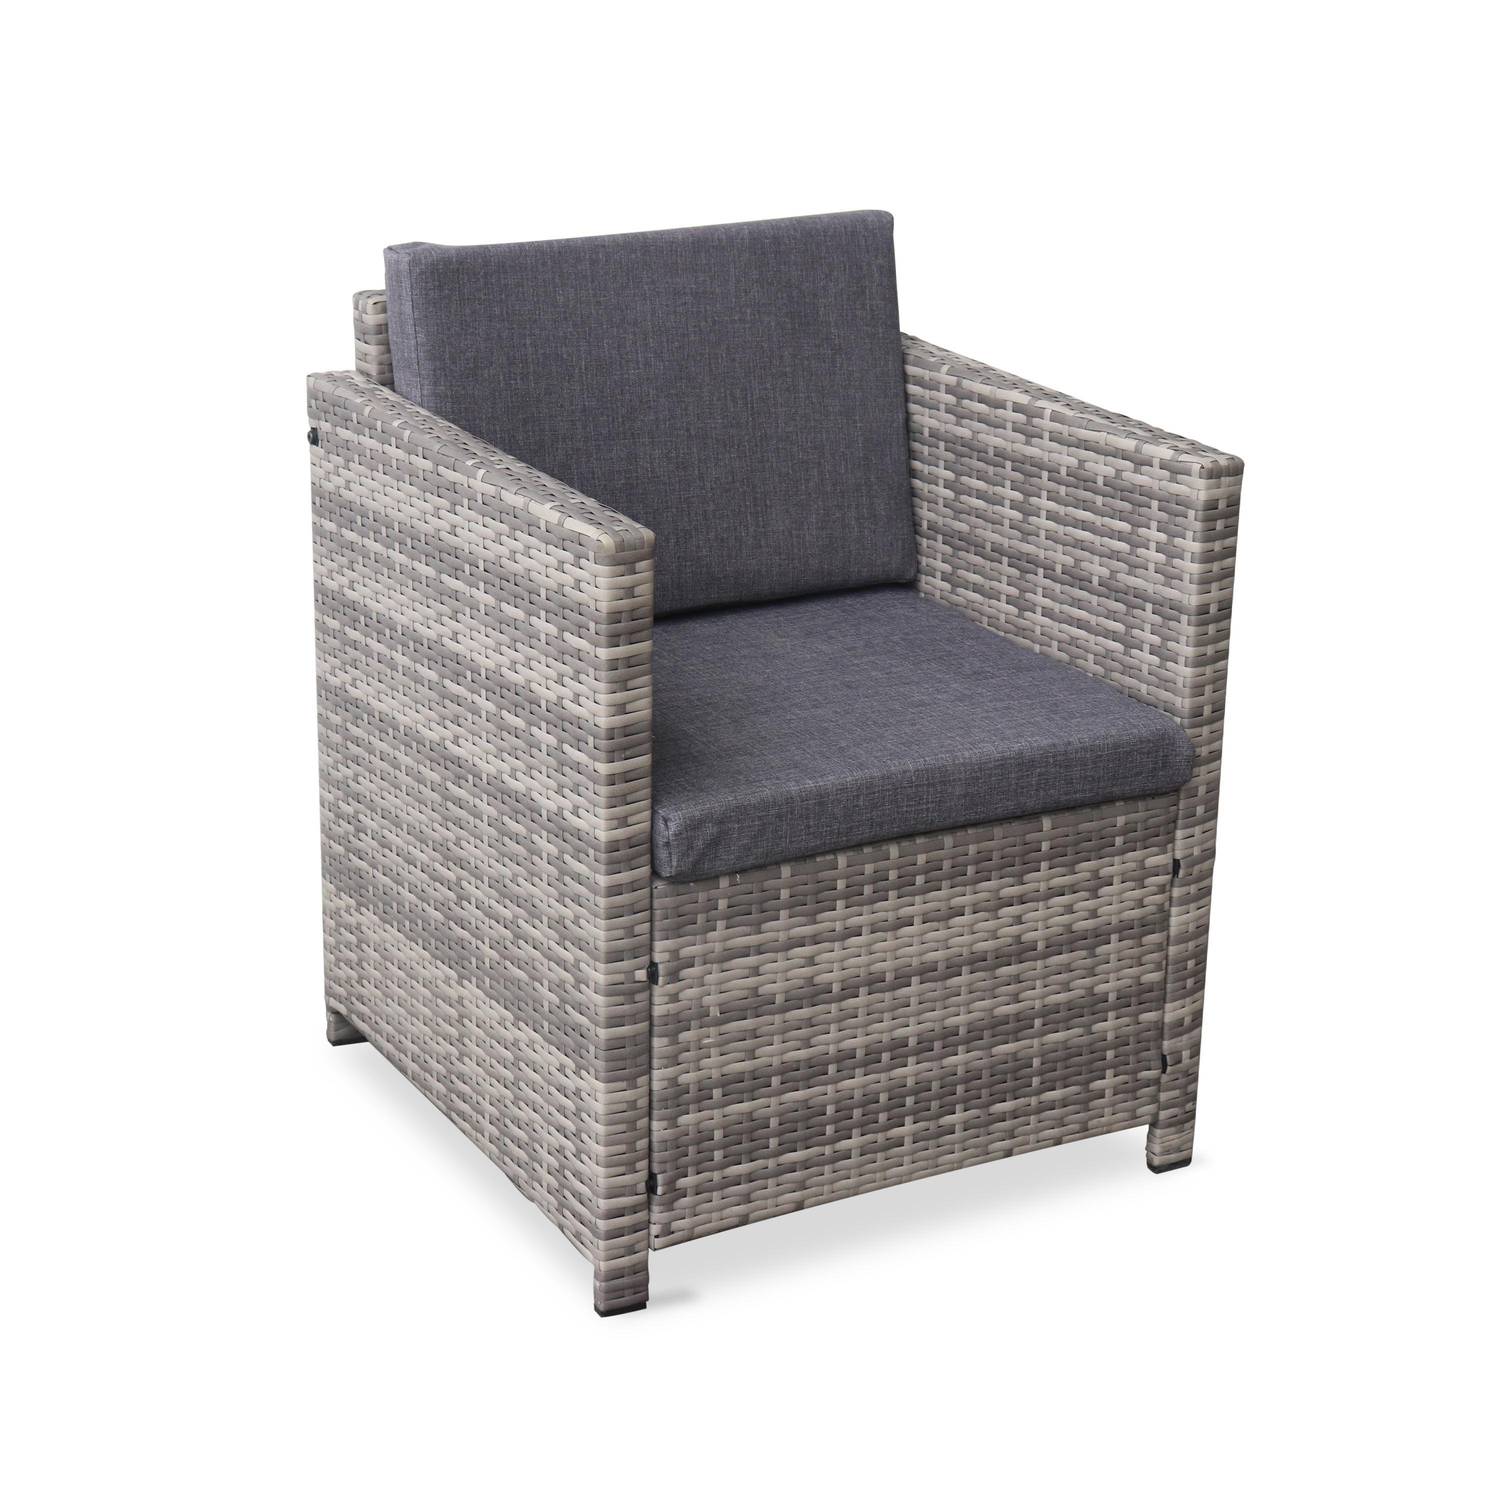 4-seater polyrattan garden sofa set - sofa, 2 armchairs, coffee table - Perugia - Mixed Grey rattan, Grey cushions Photo4